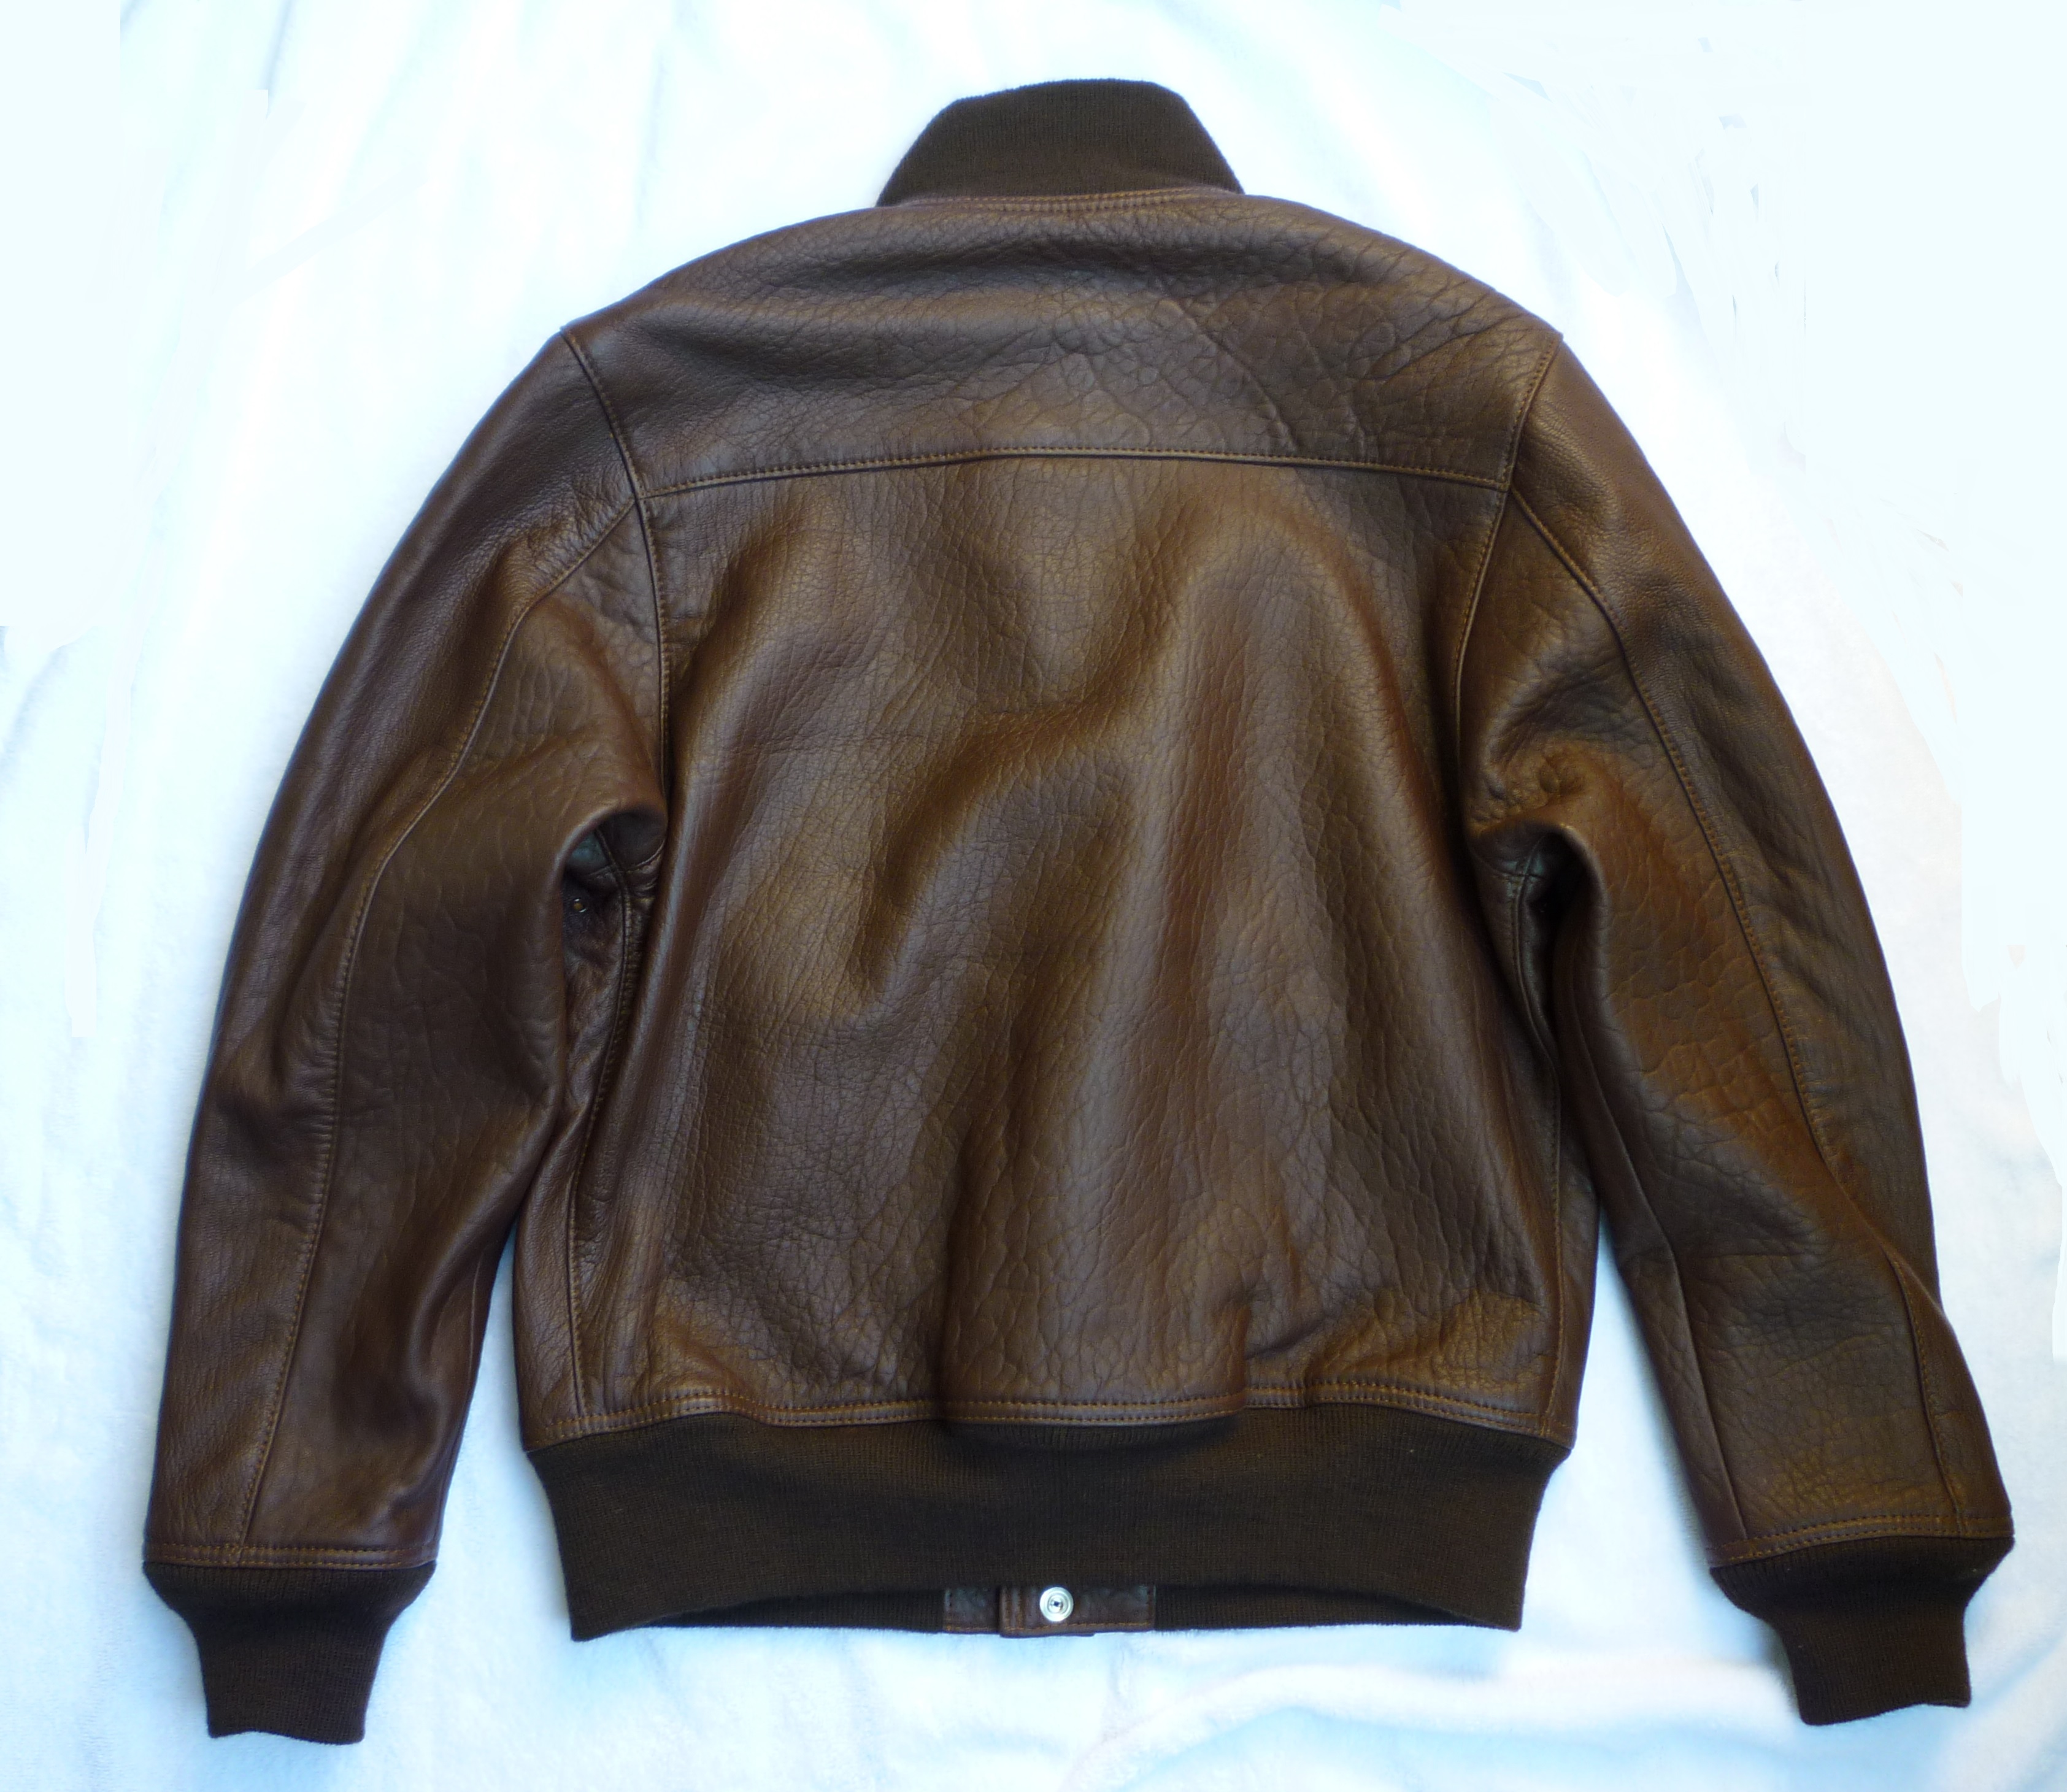 Headwind Mfg Co - Our New USN 37J1 Jacket | Vintage Leather Jackets Forum